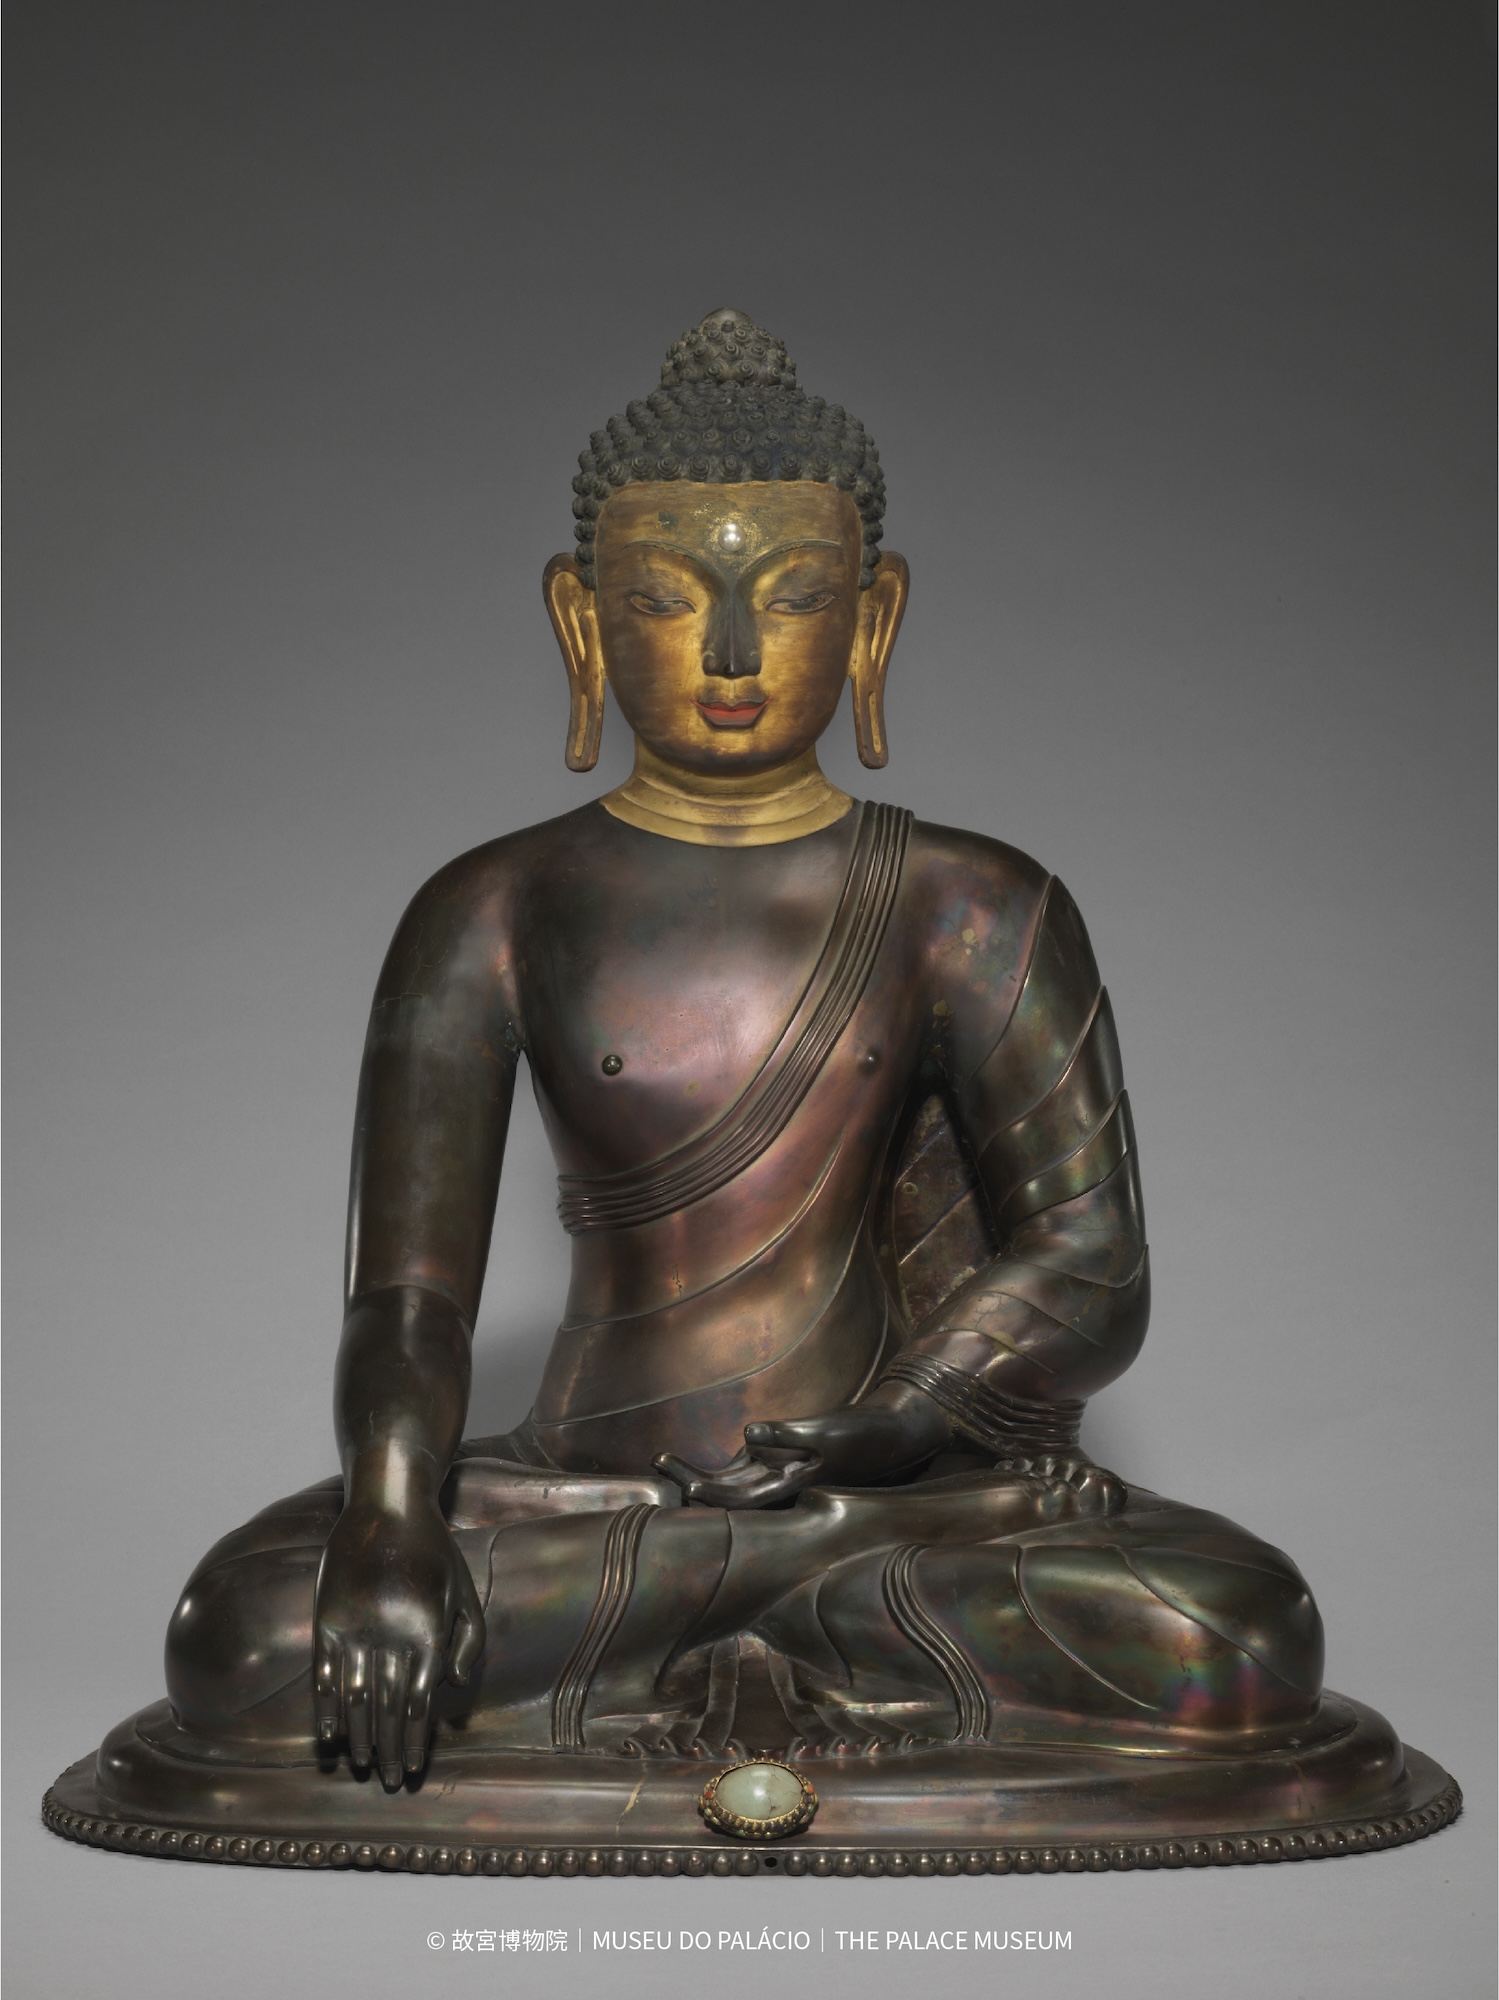 Statue of Shakyamuni Buddha made in zi-khyim